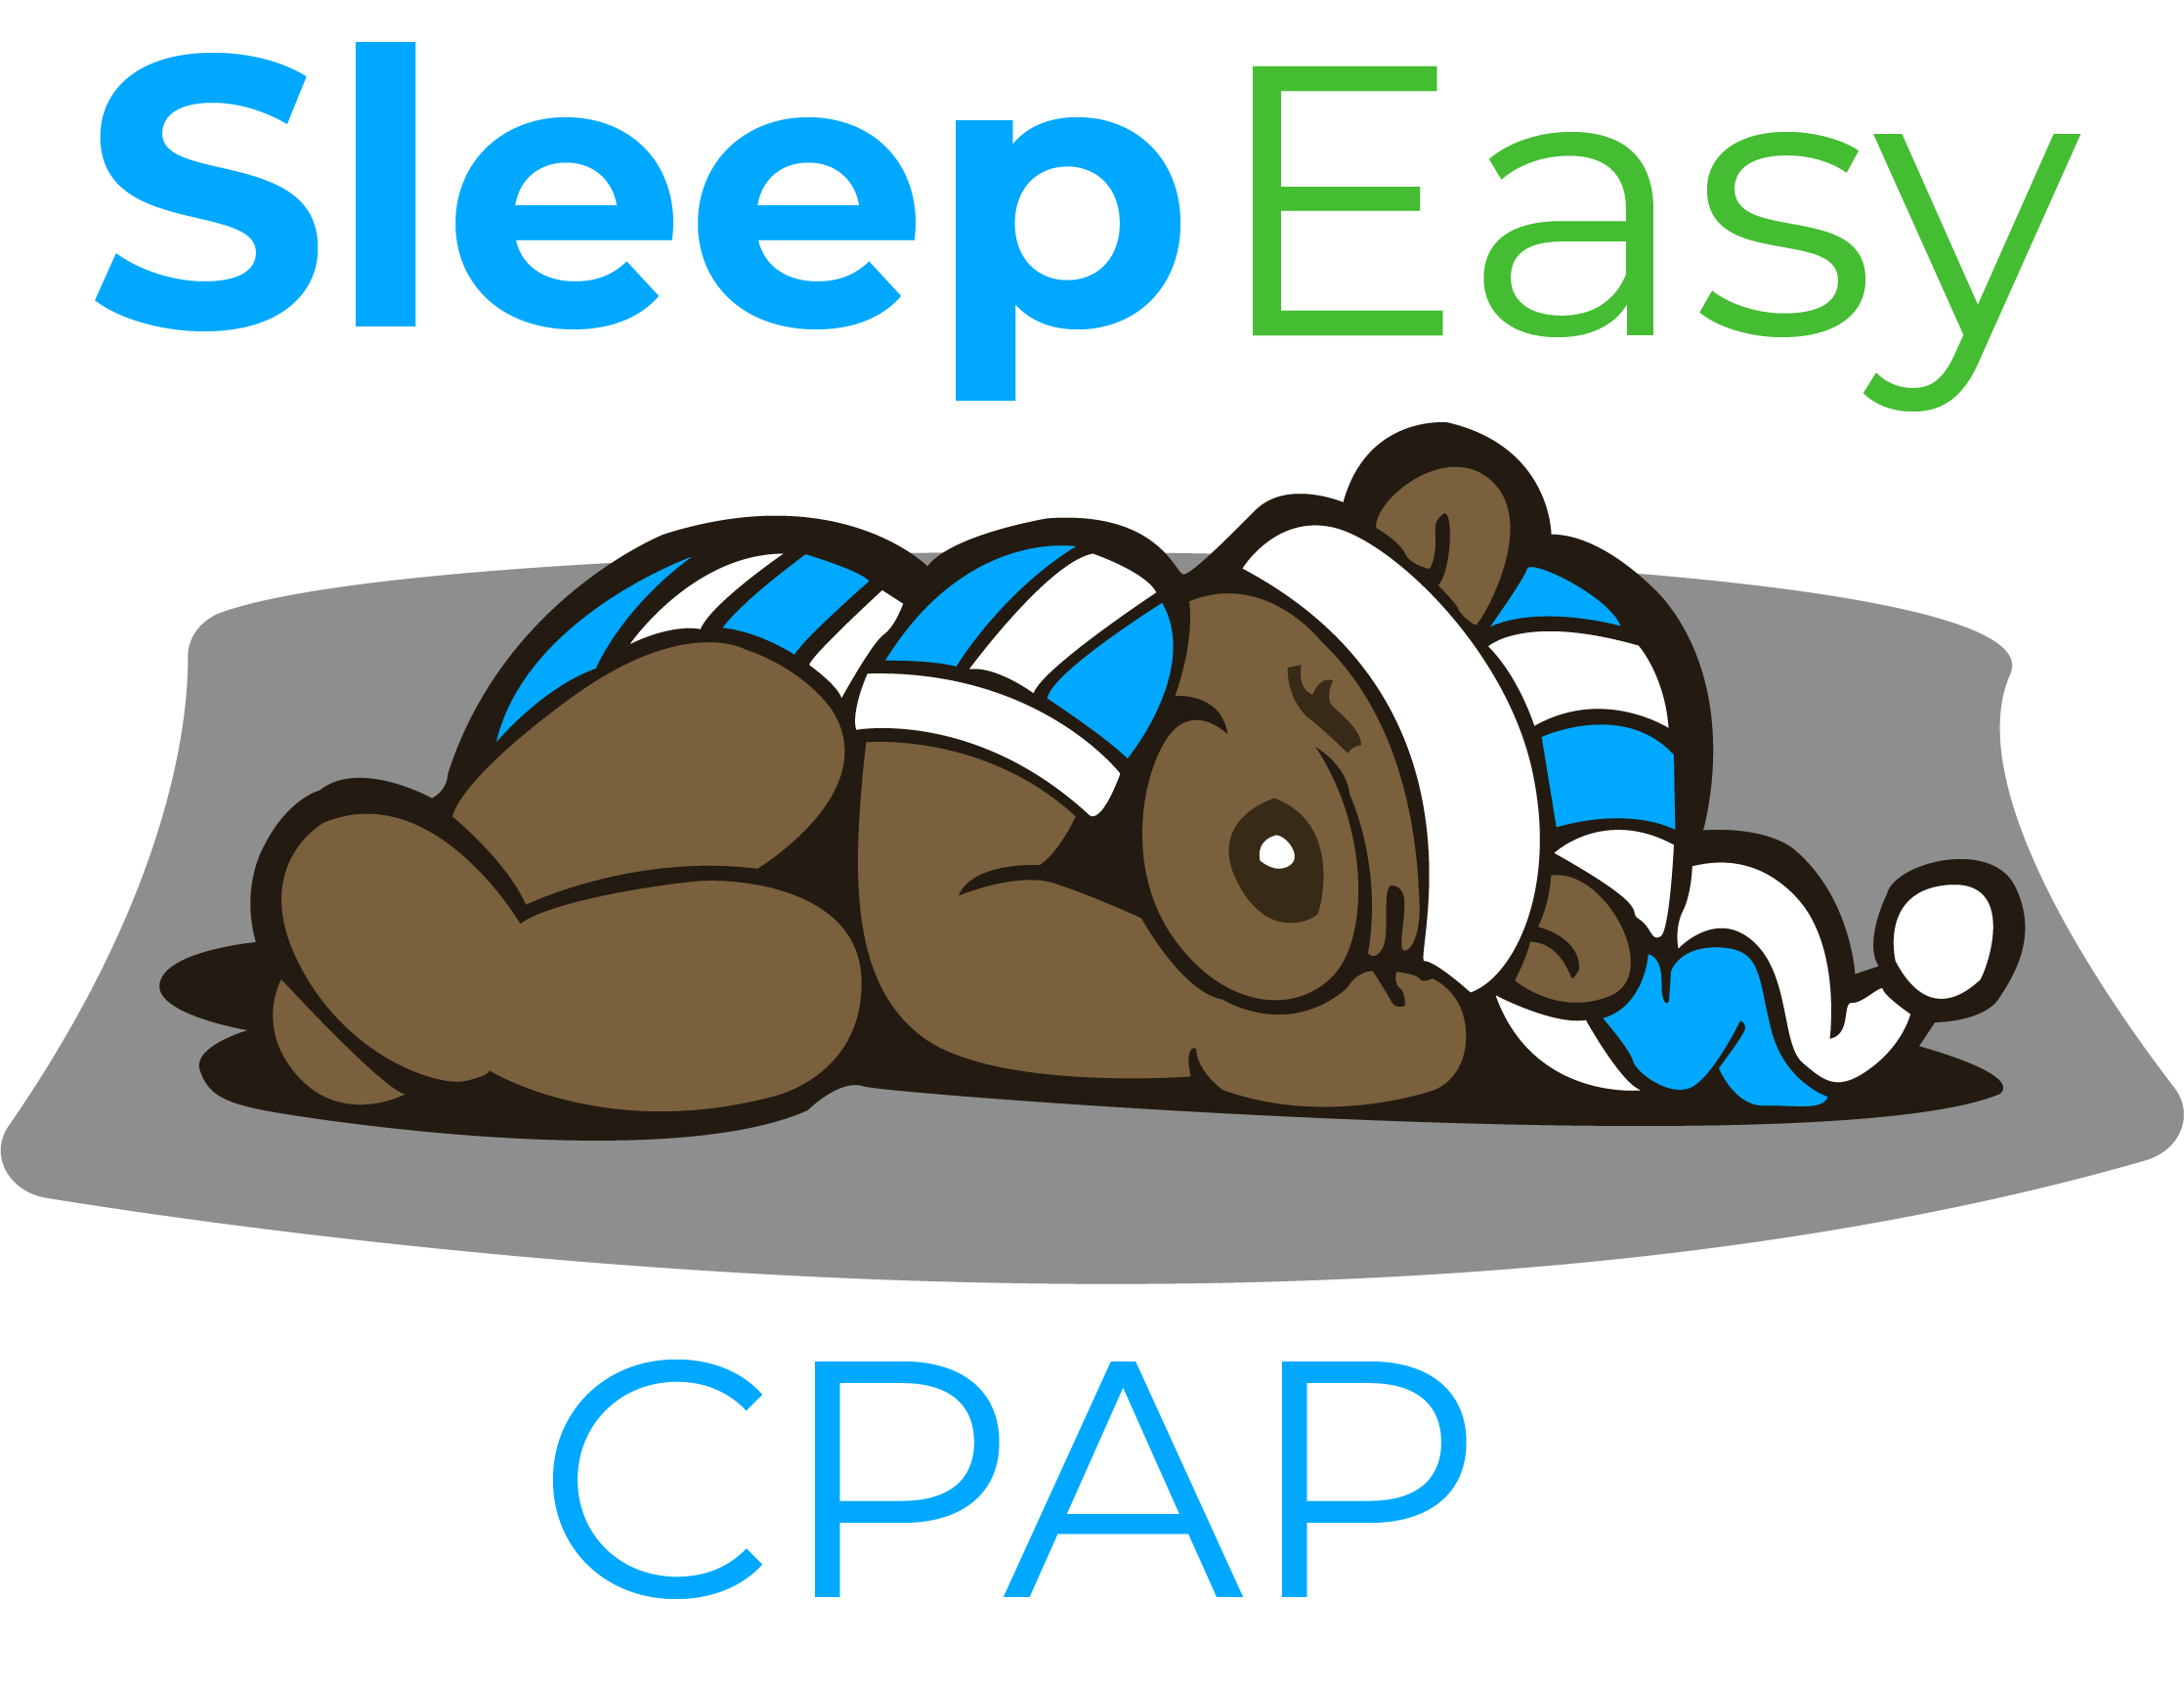 SleepEasy CPAP